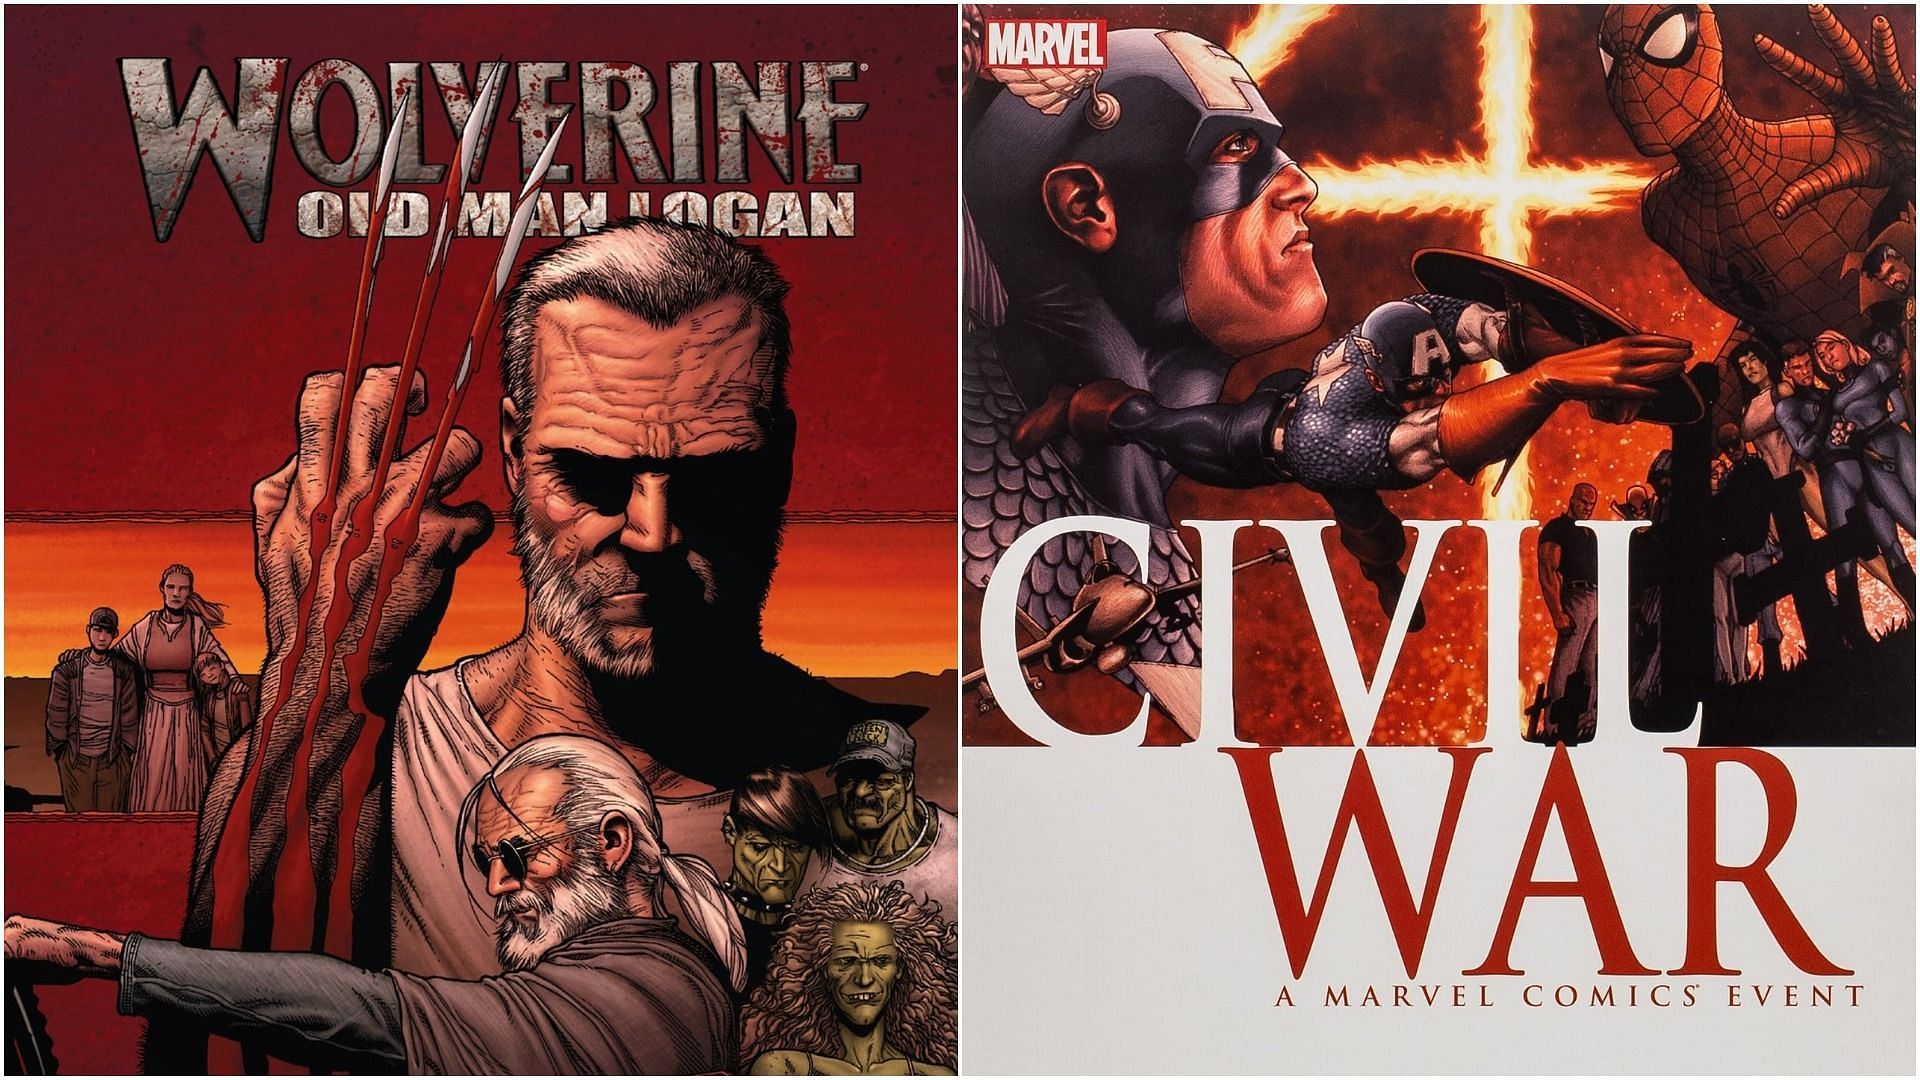 Old Man Logan and Civil War (Image via Marvel Comics)